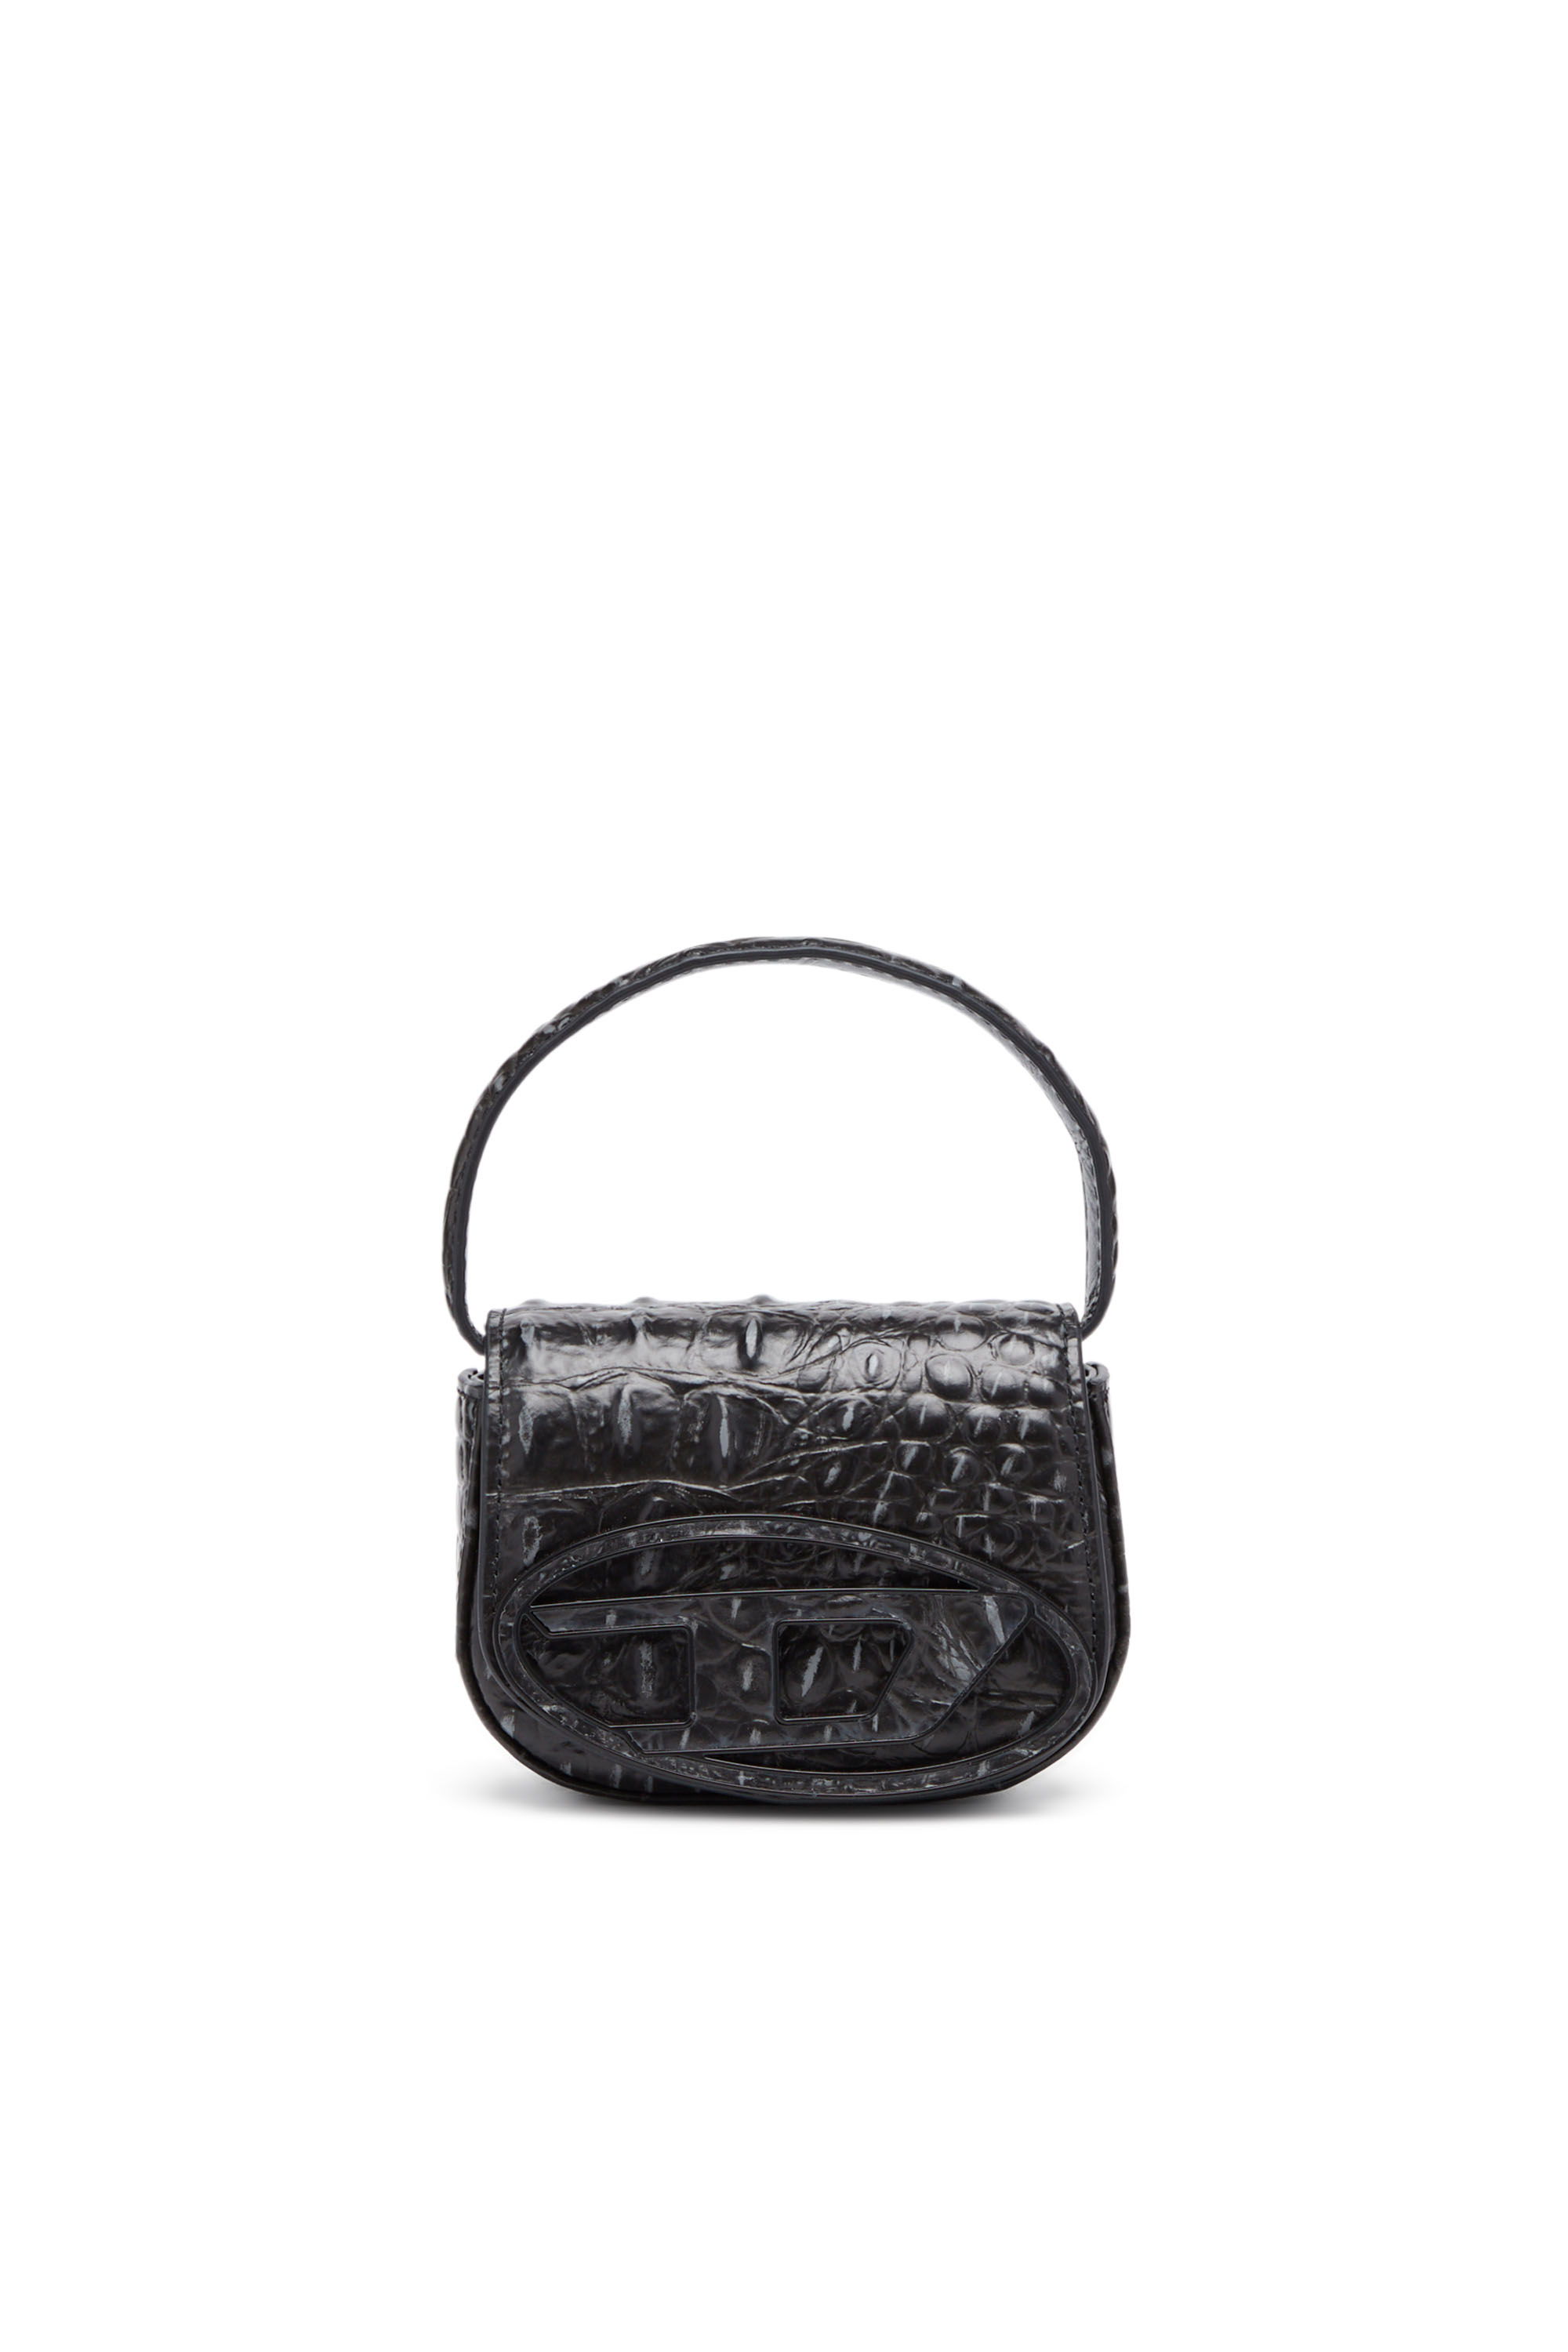 Diesel - 1DR XS - Iconic mini bag in croc-print leather - Crossbody Bags - Woman - Black